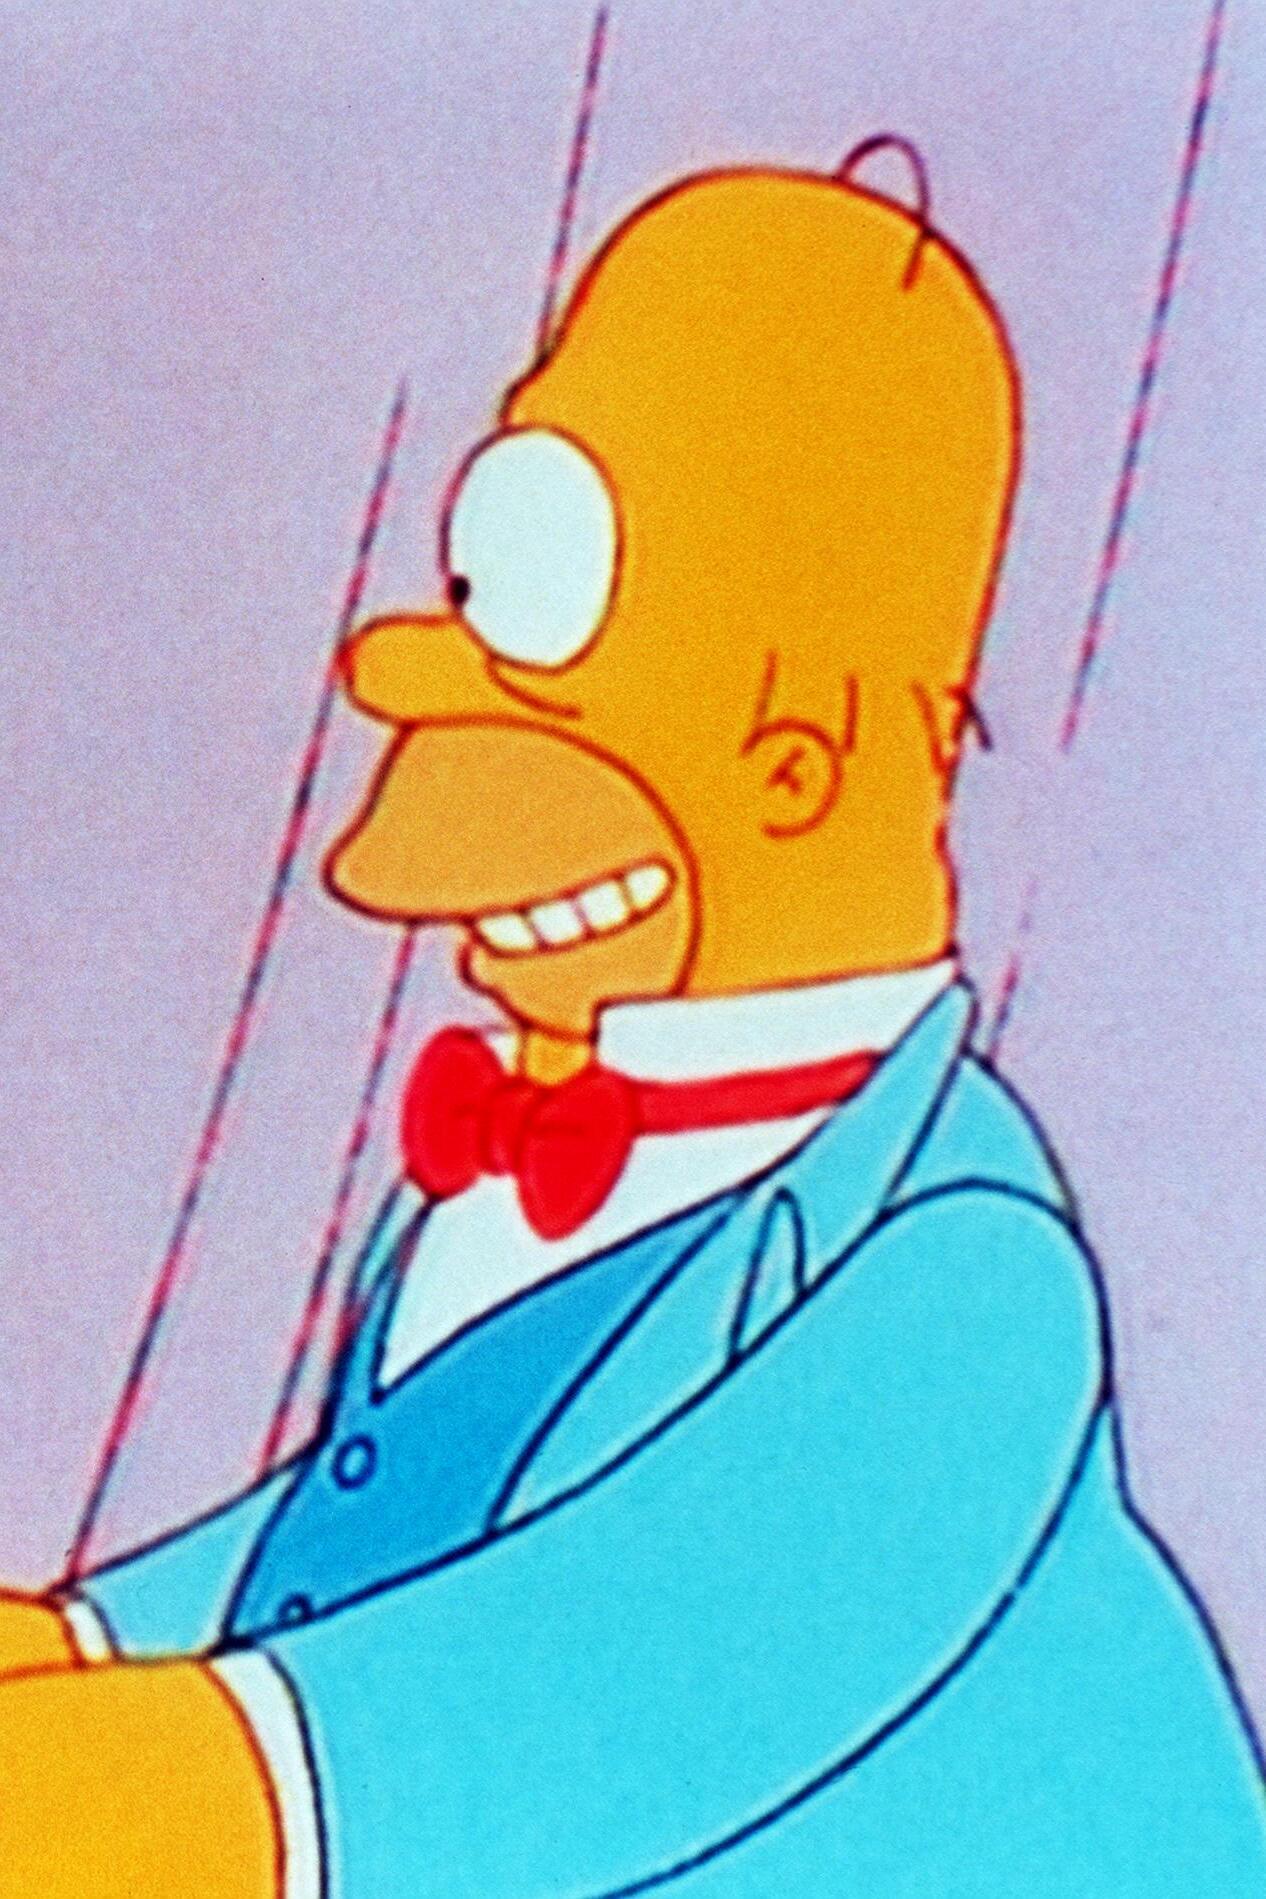 The Simpsons - Lisa's Wedding